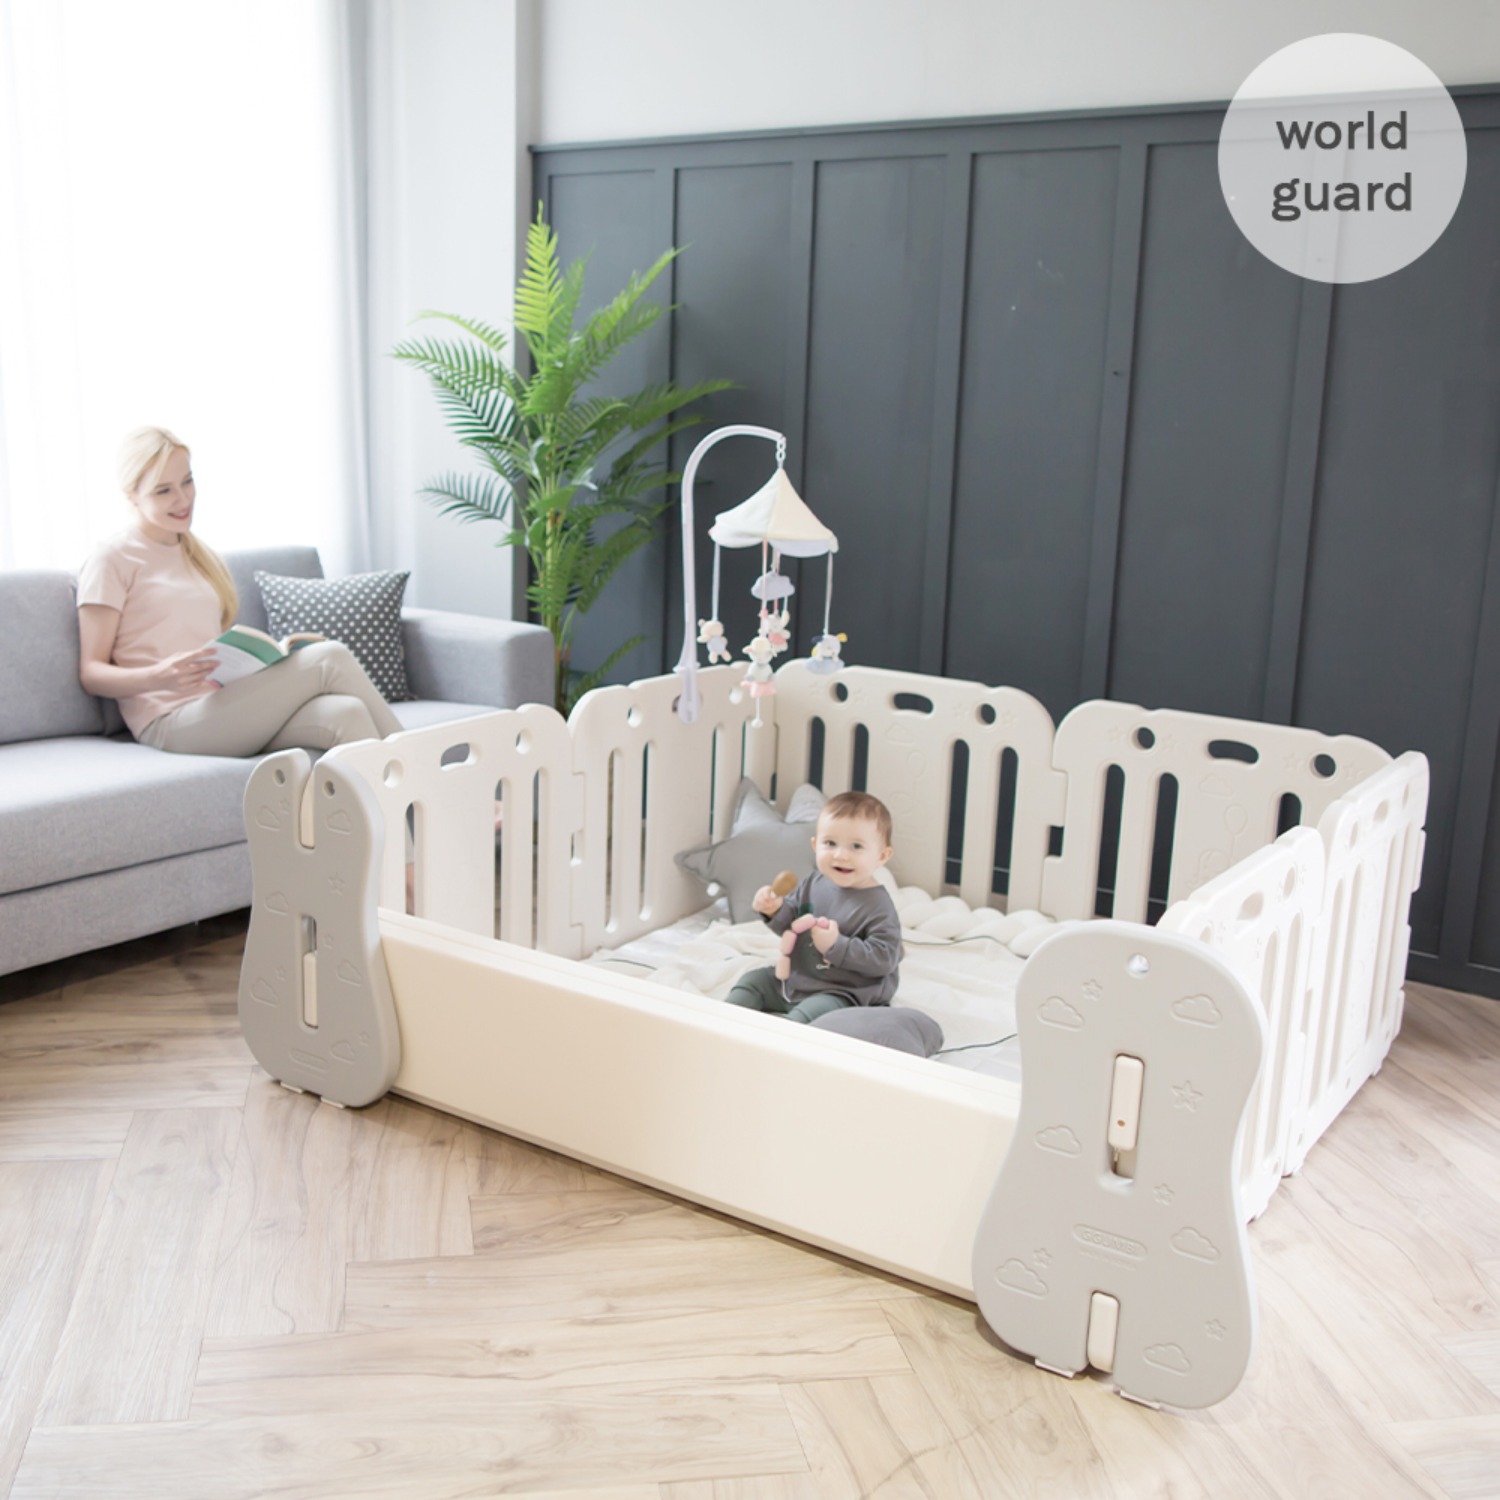 world guard baby room set